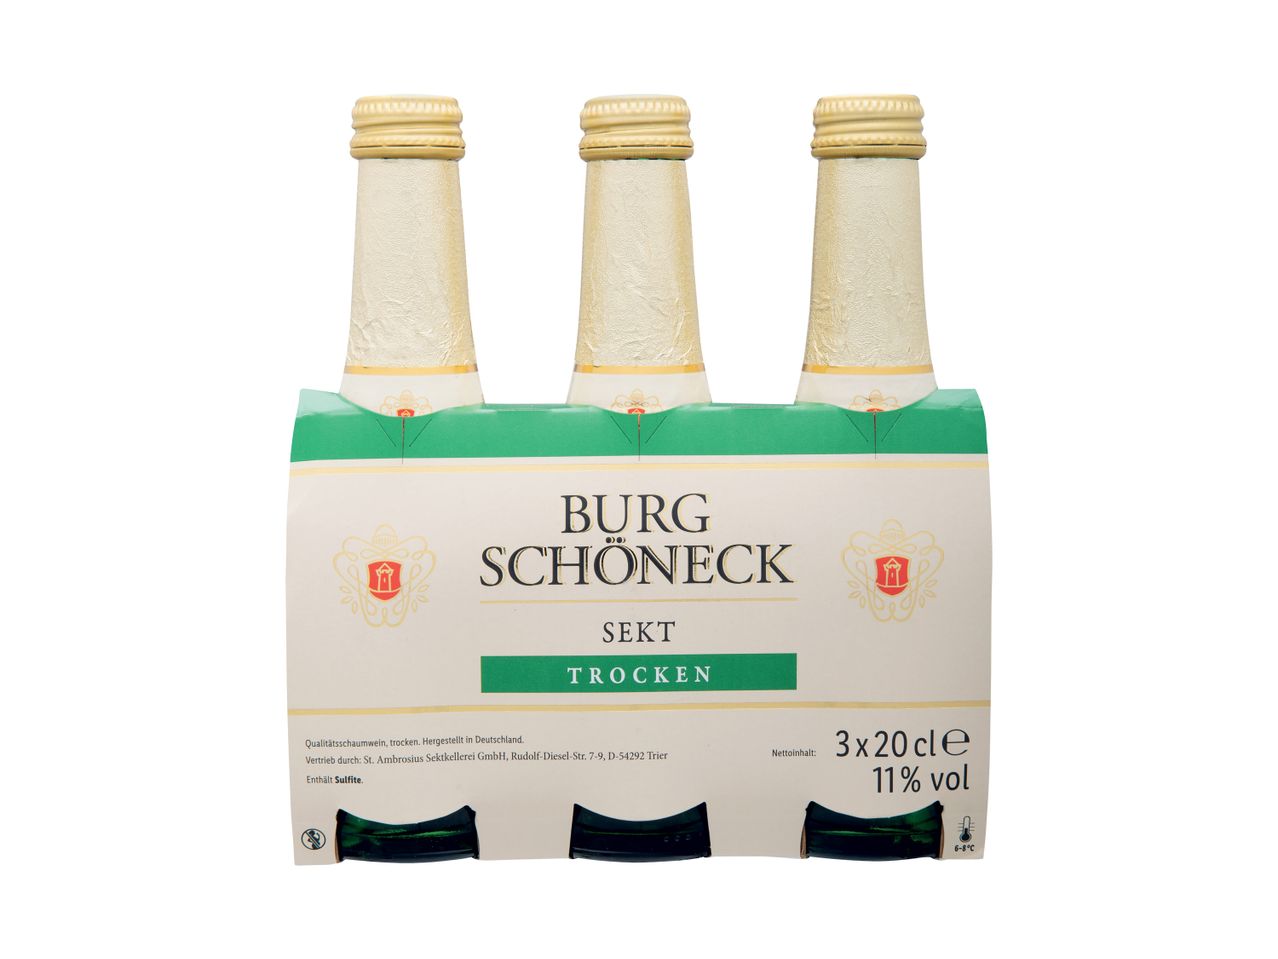 Įjungti viso ekrano vaizdą: Putojantis sausas vynas „Burg Schöneck Sekt trocken“ – vaizdas 1